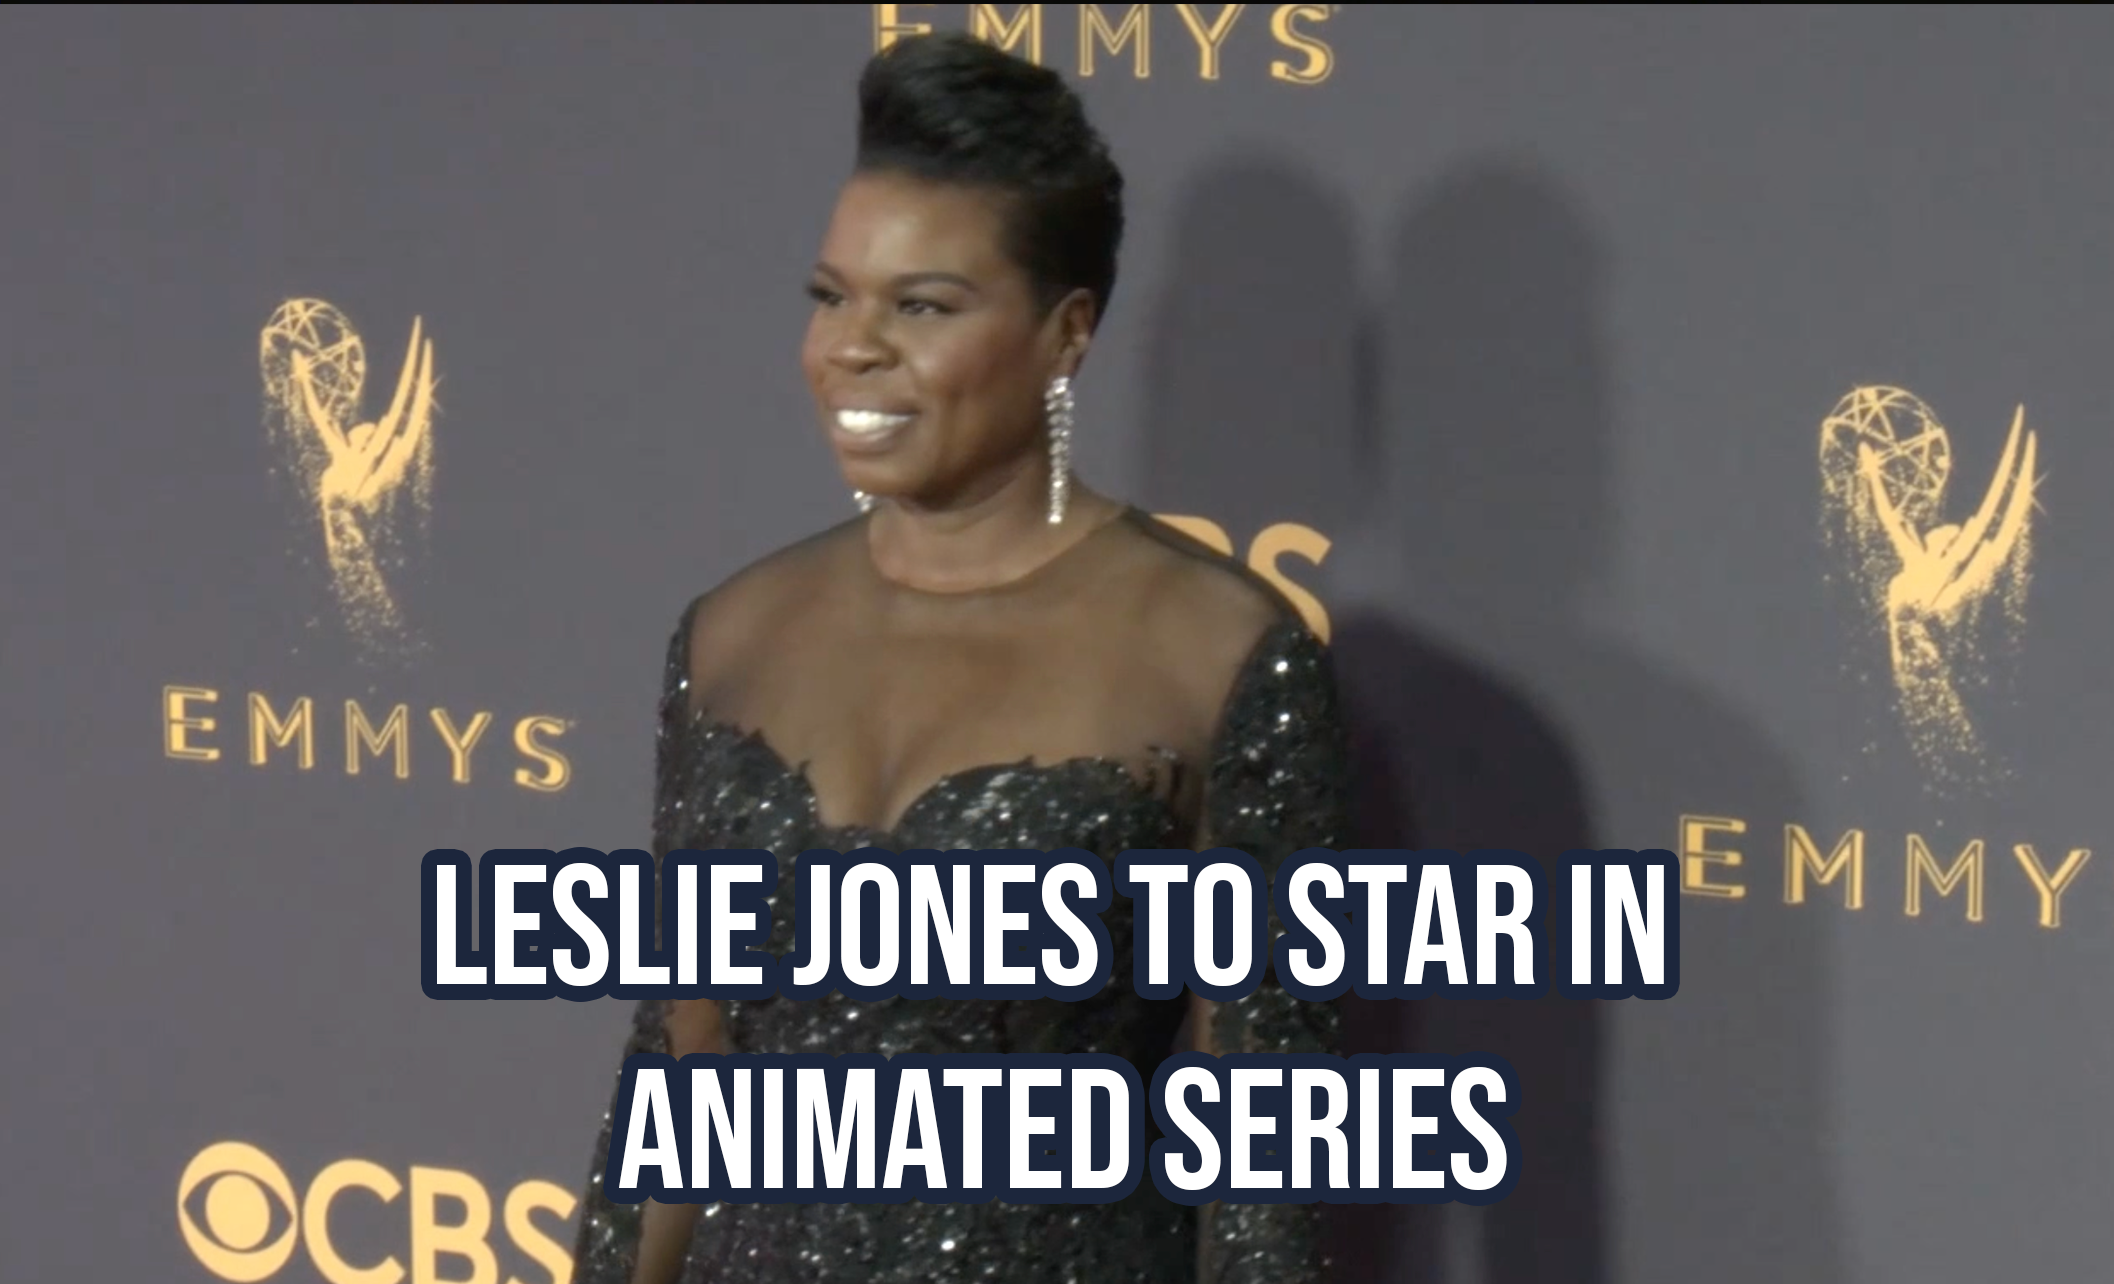 Leslie Jones to star in animated series